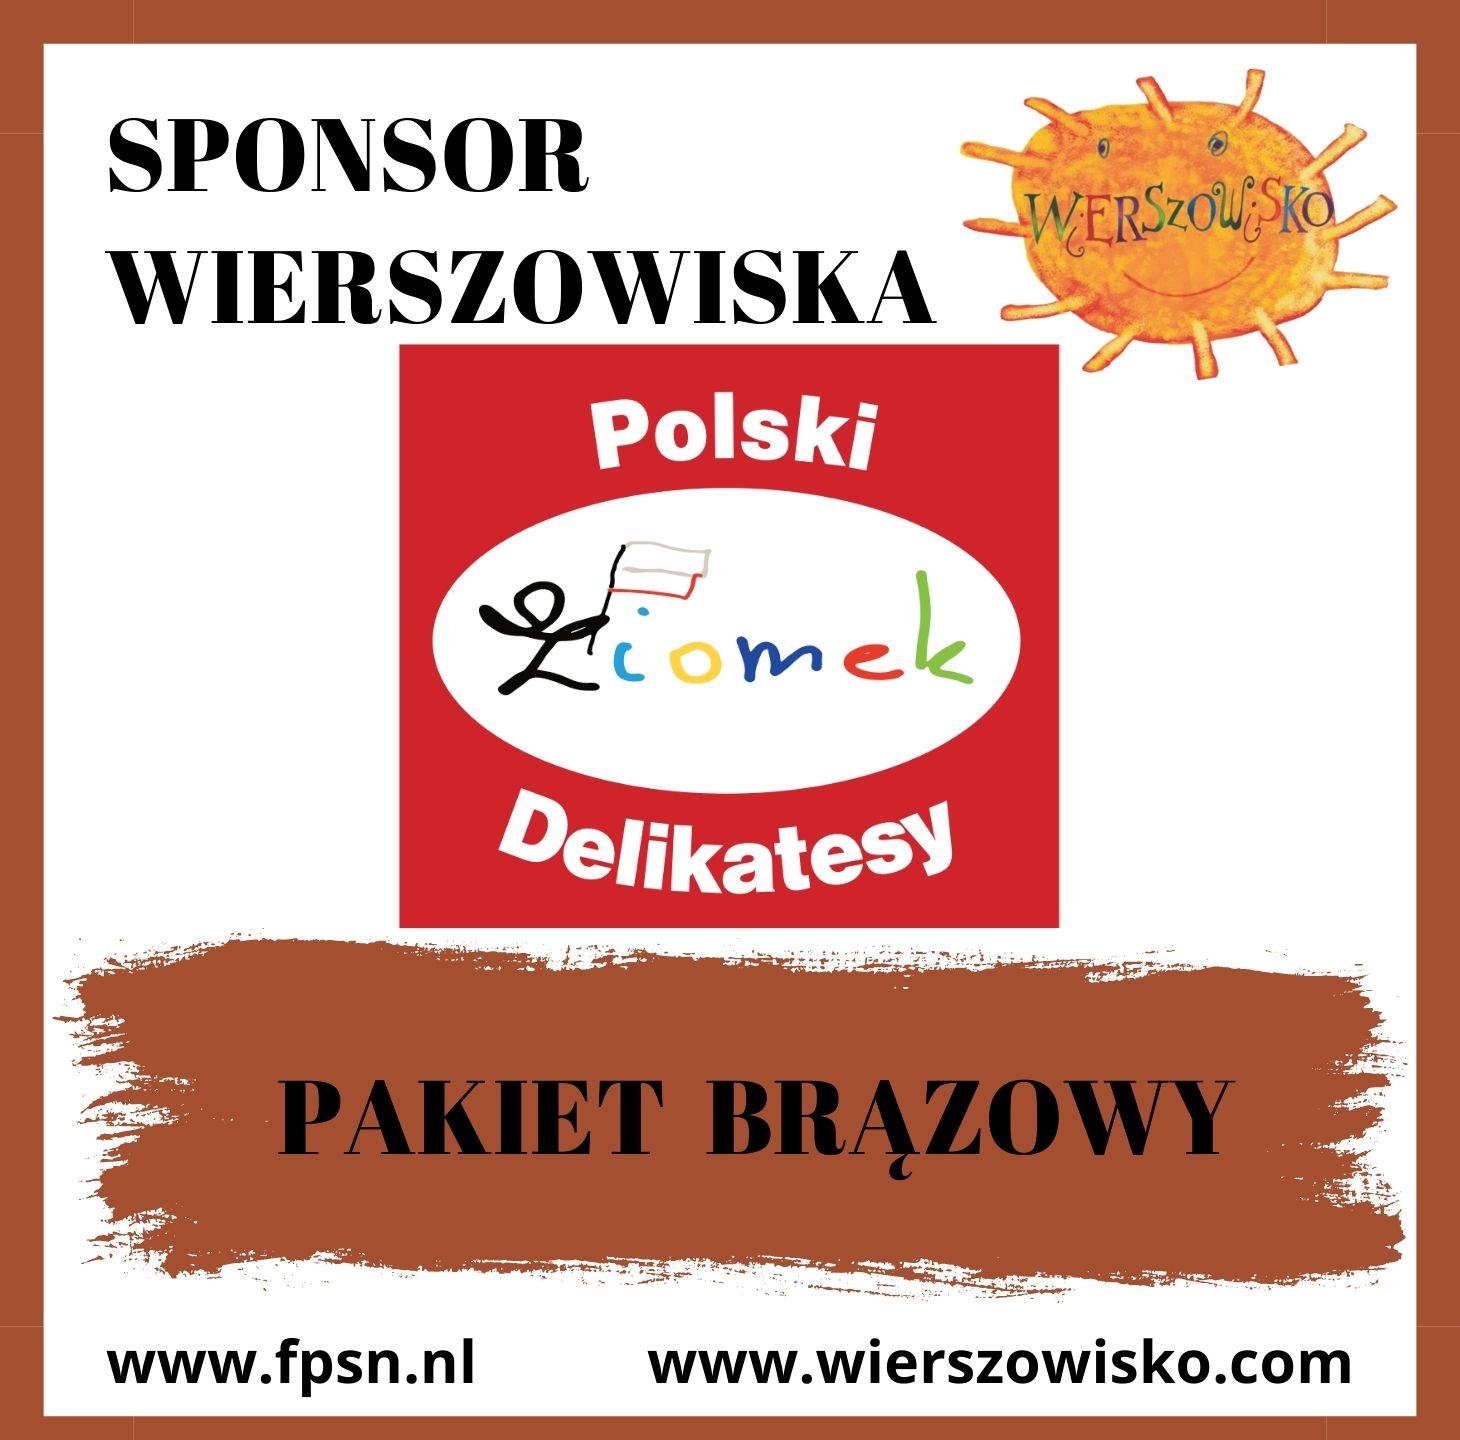 Polski Ziomek Delikatesy